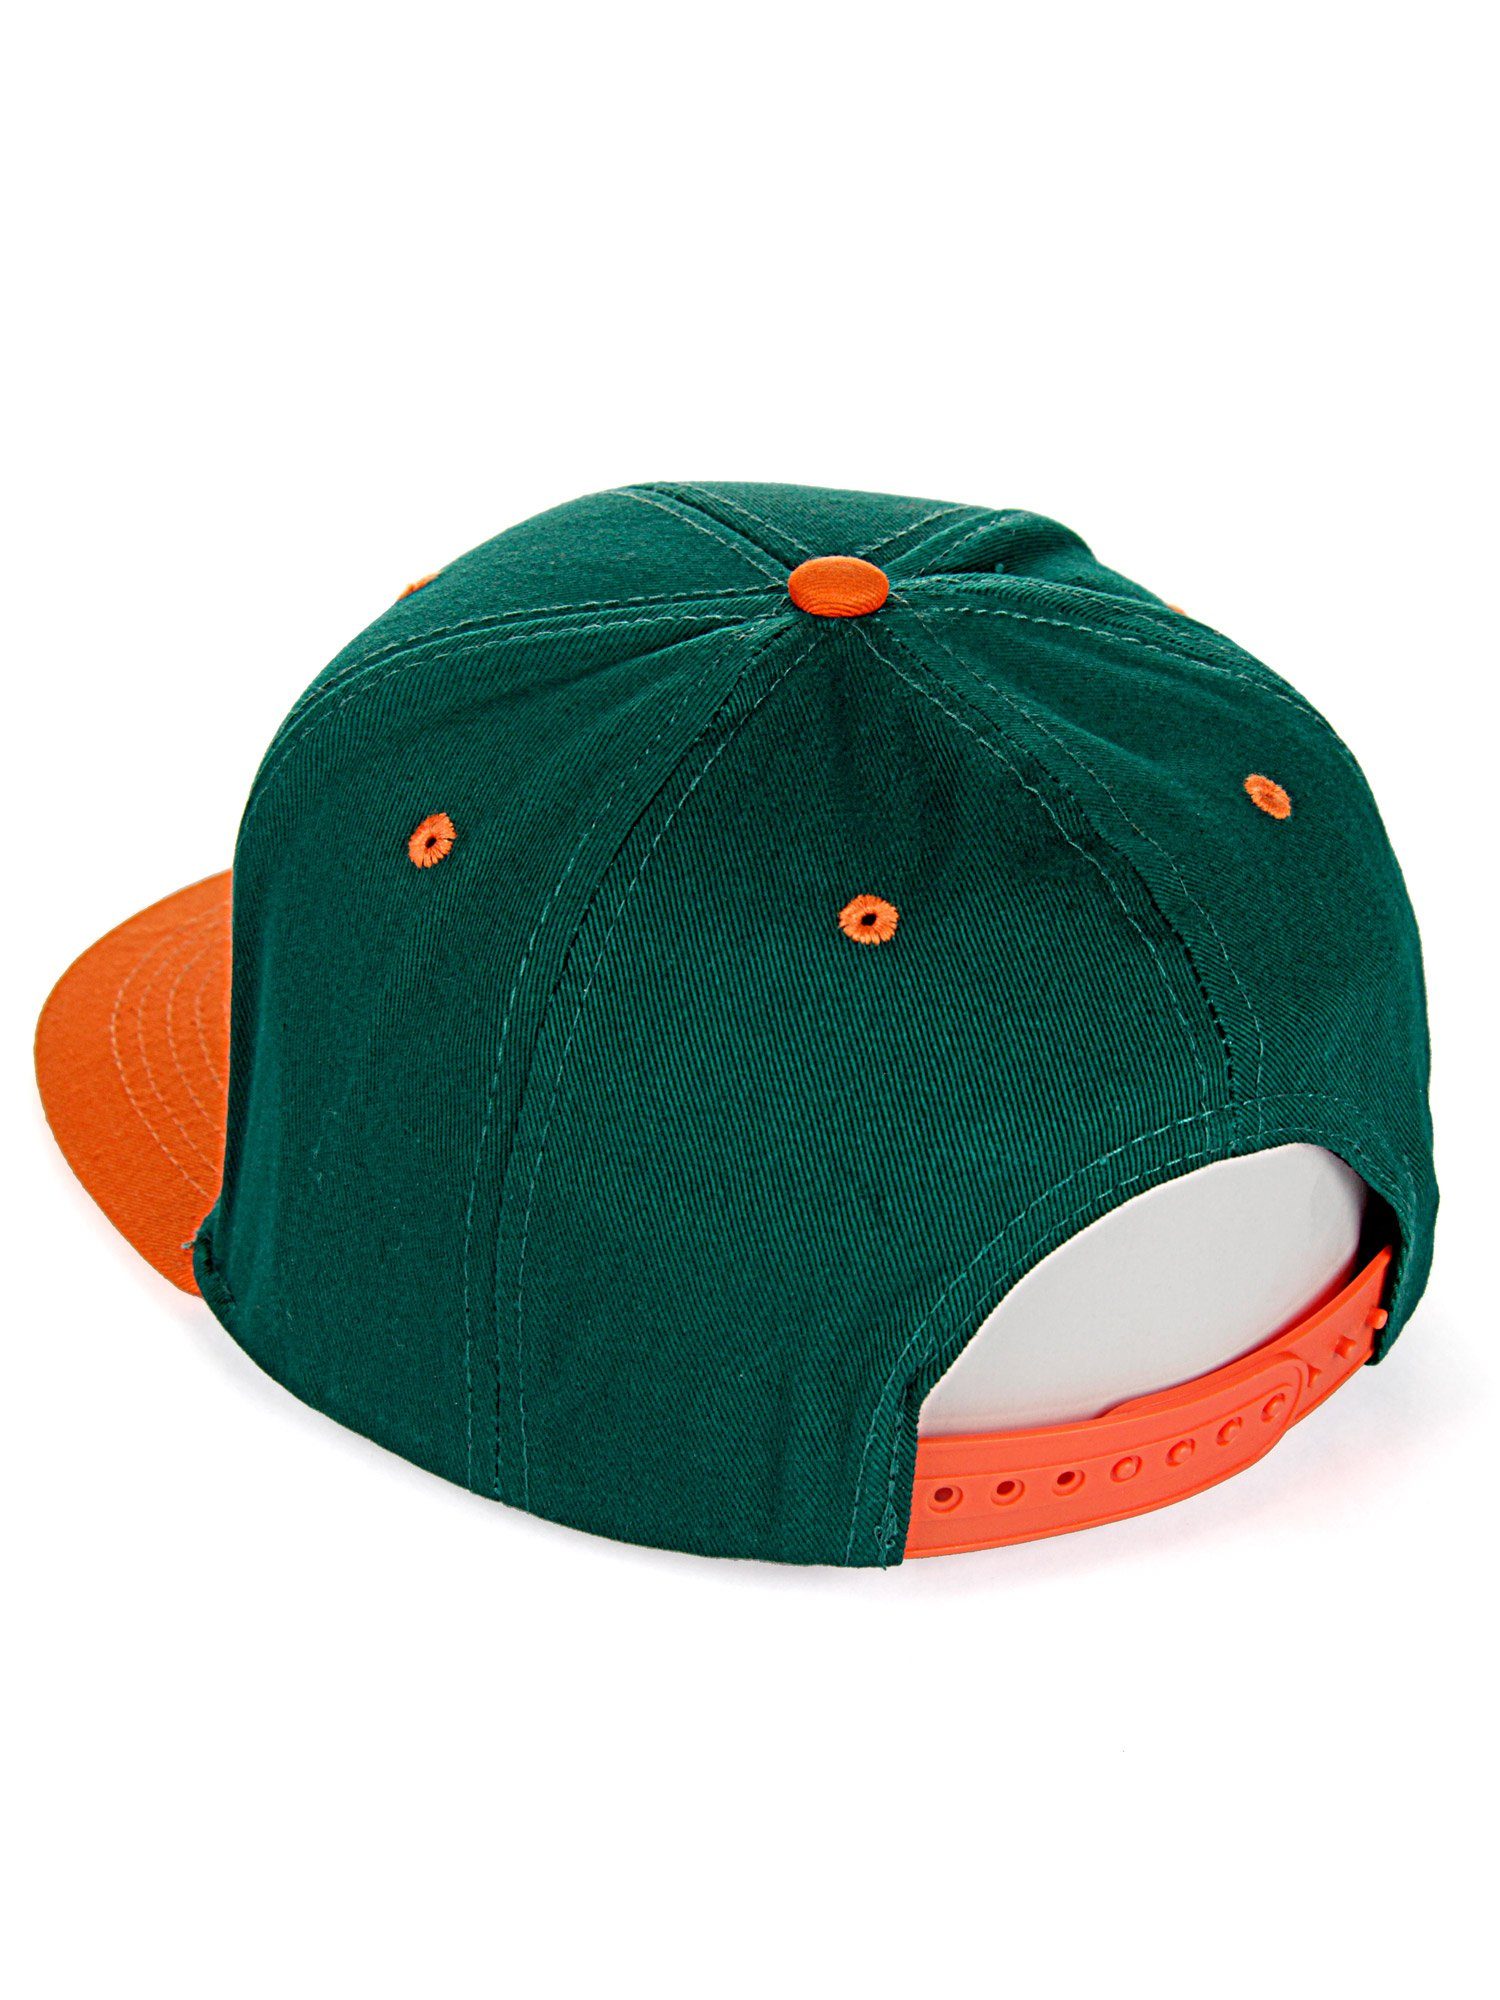 kontrastfarbigem grün-orange Cap Sittingbourne Baseball RedBridge mit Schirm